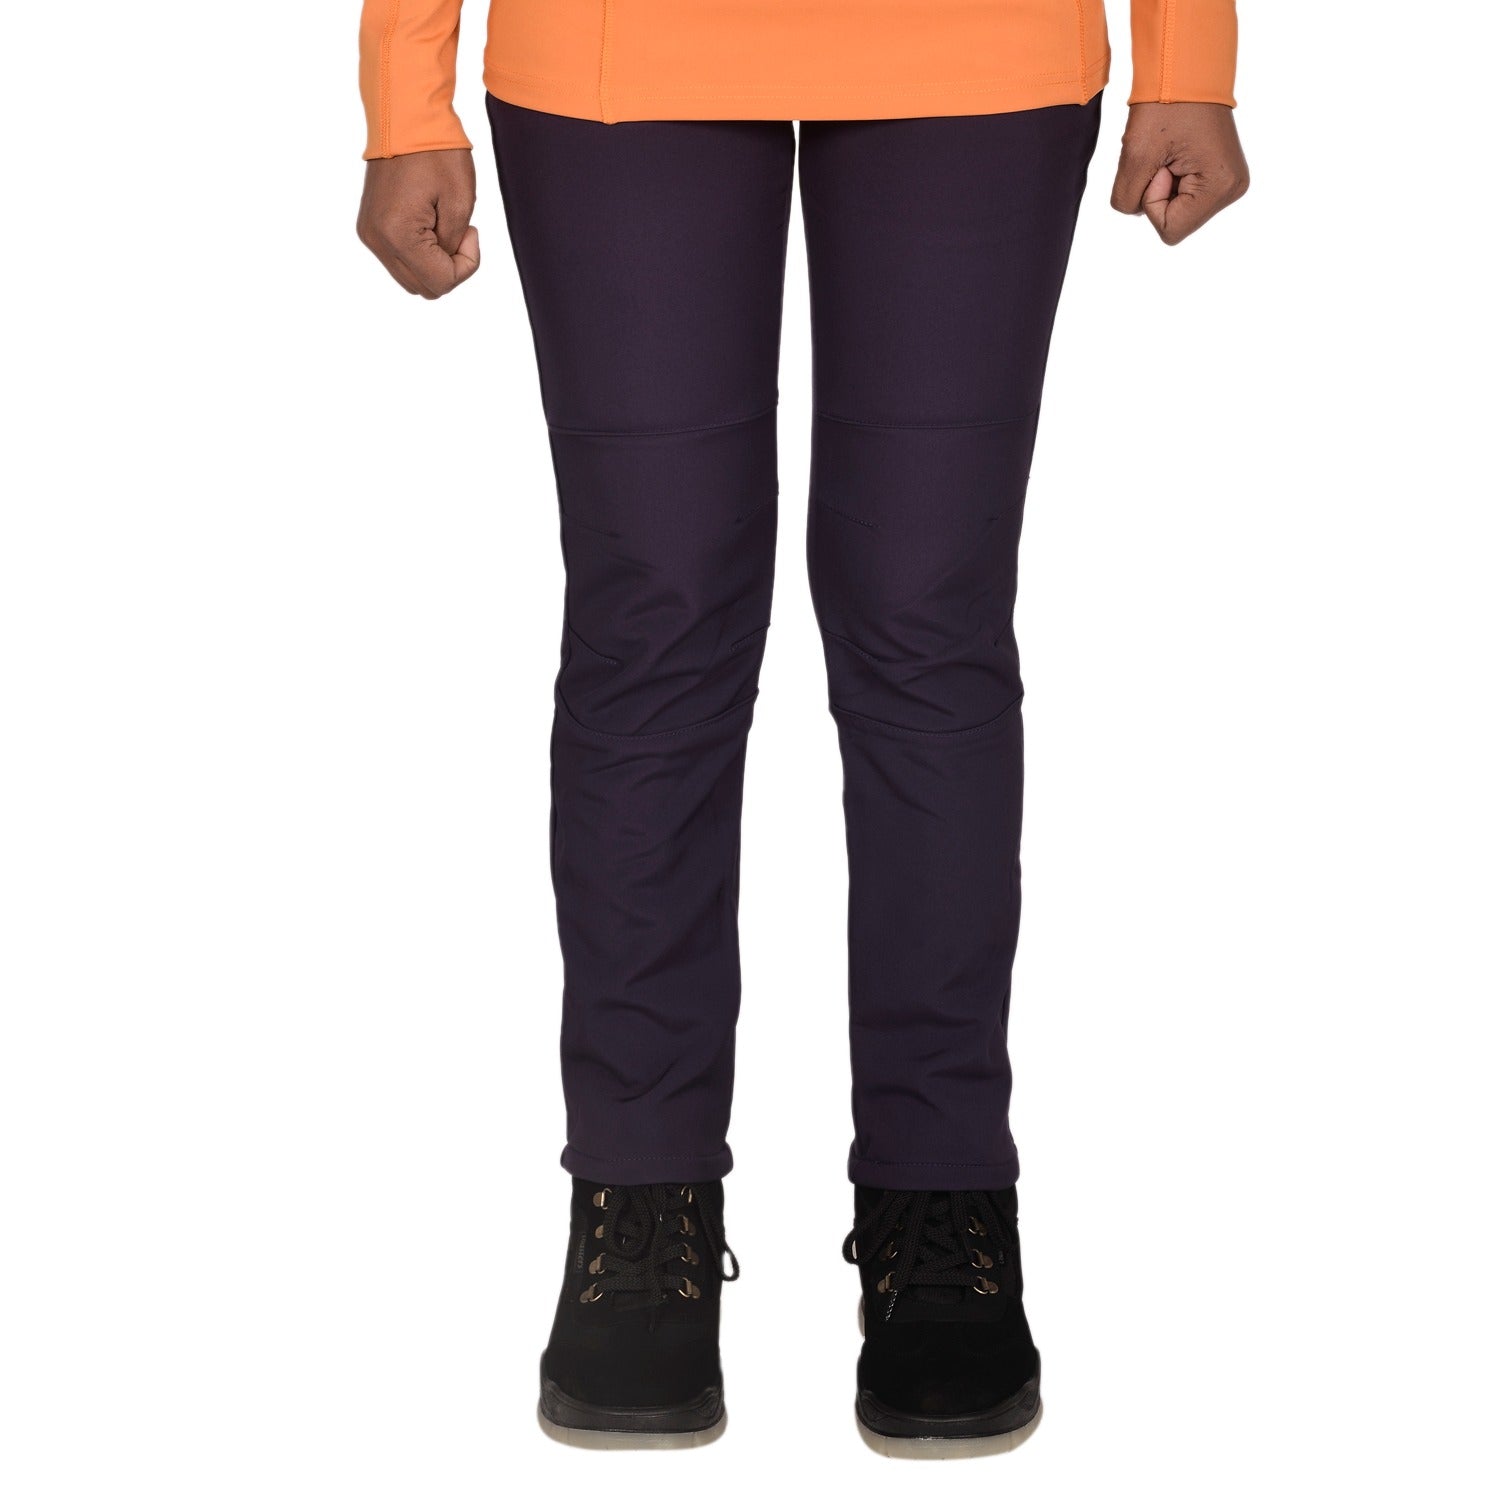 Buy Gokyo K2 Cold Weather Trekking & Outdoor Pants - Women Purple Lavender | Trekking & Hiking Pants at Gokyo Outdoor Clothing & Gear